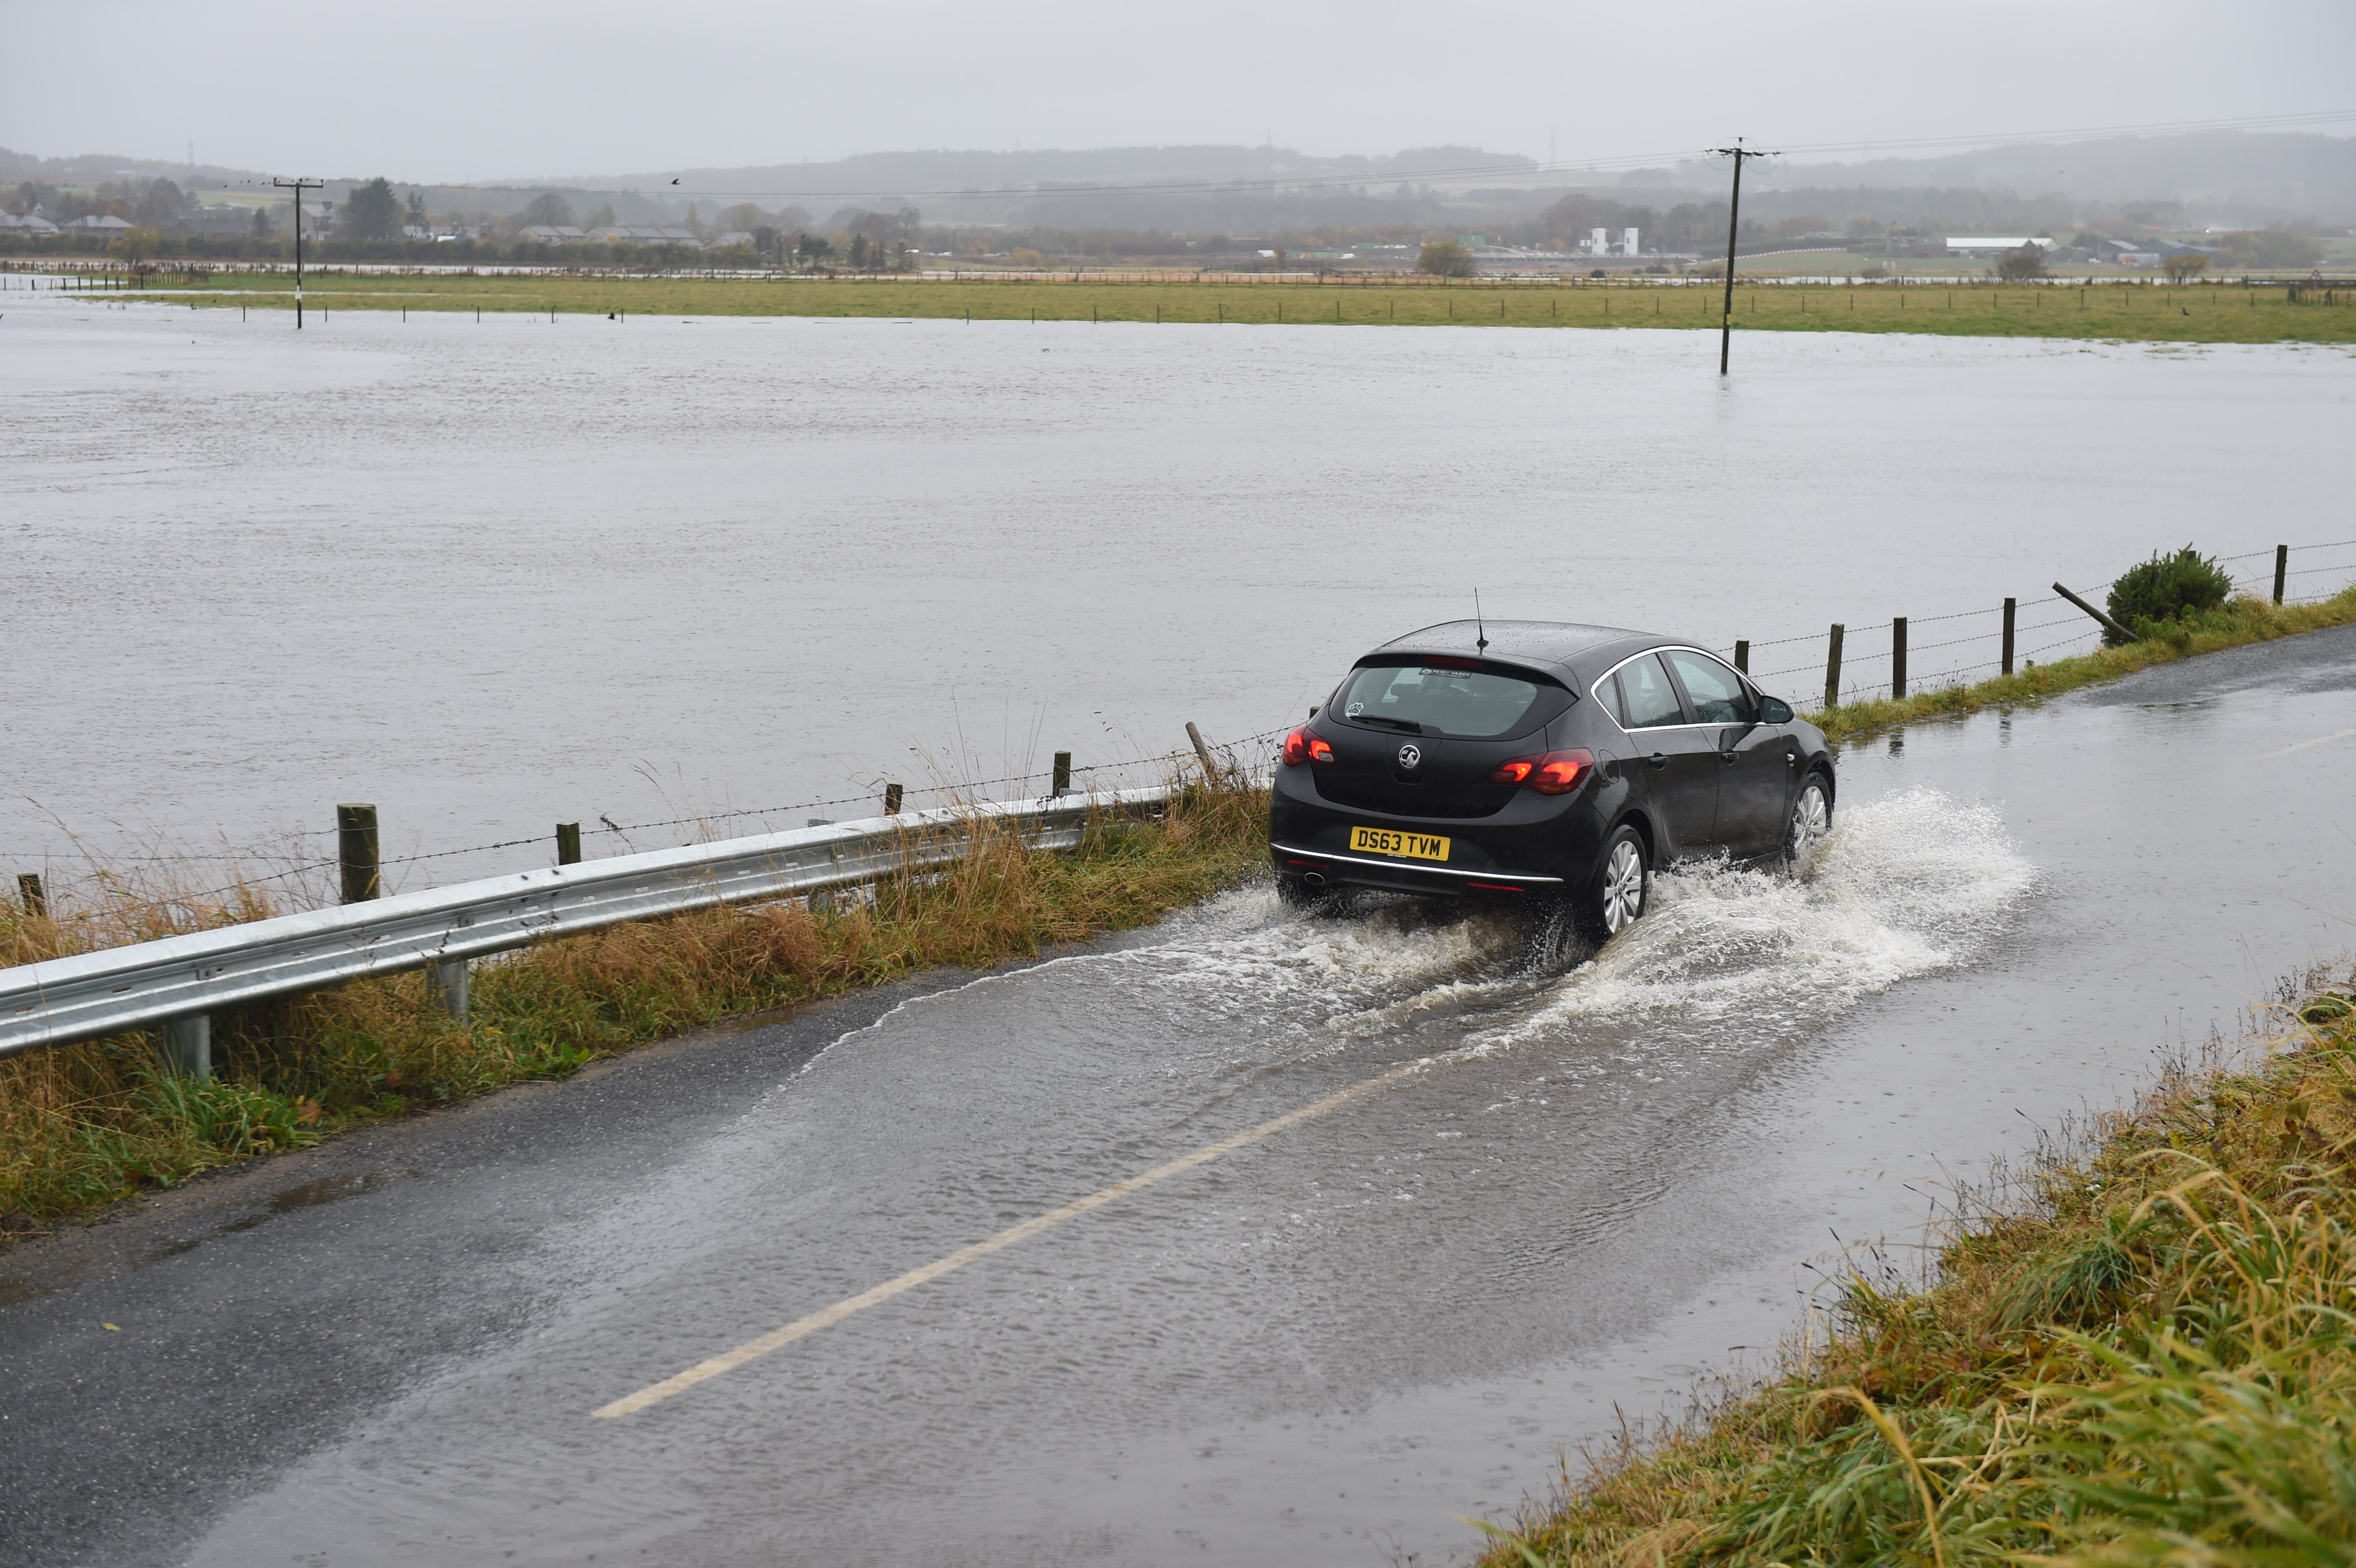 Flooded road and fields near Kintore Golf Club
Paul Glendell 011119 -01-05